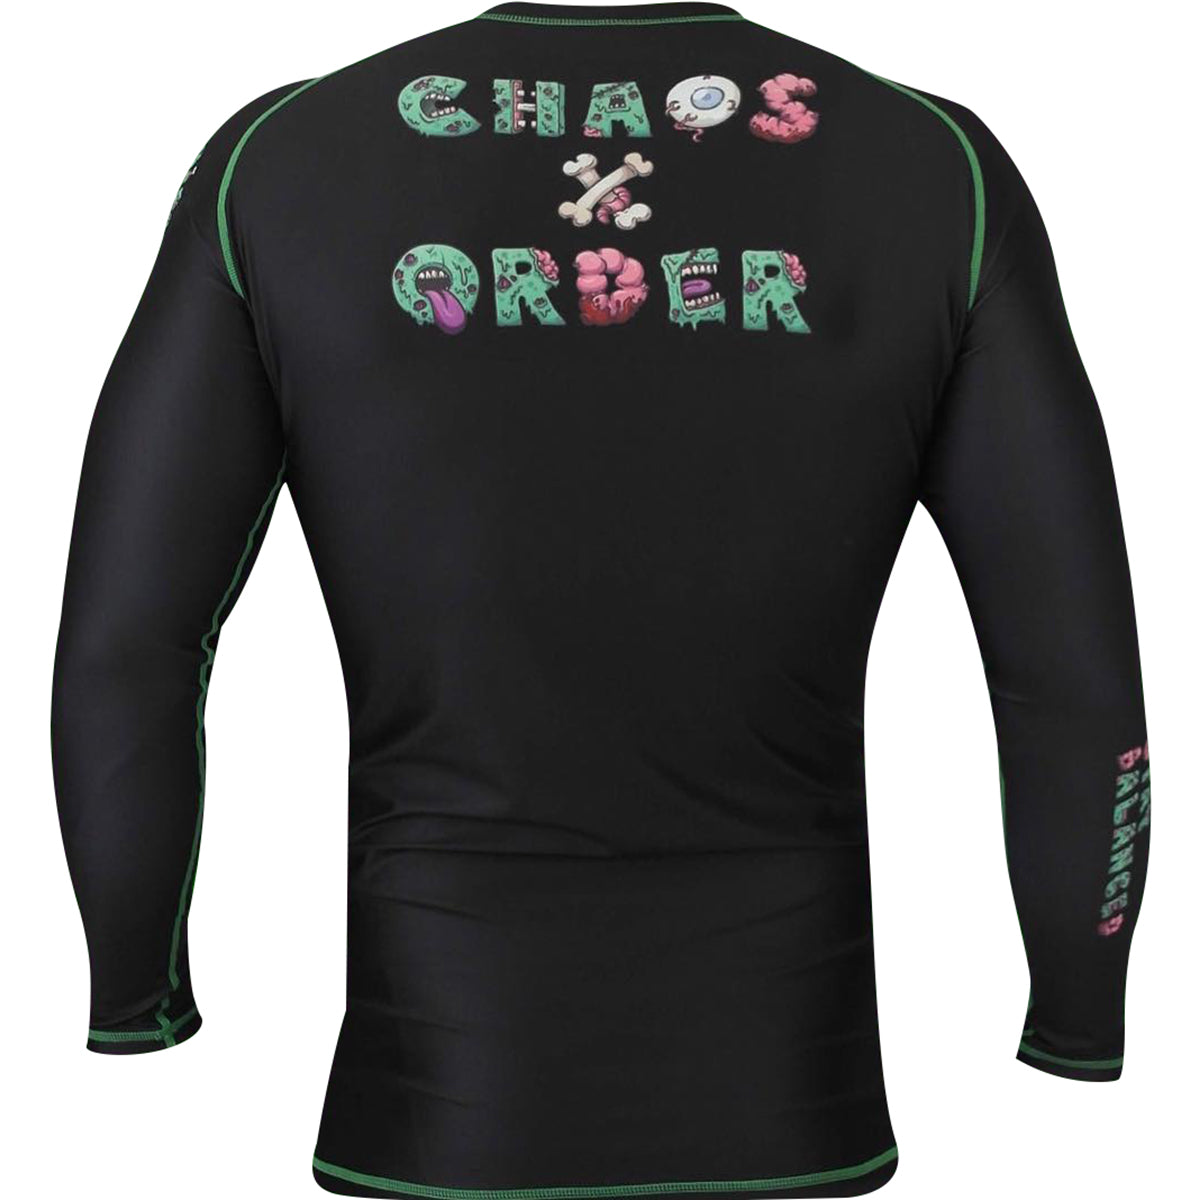 Chaos and Order Z-Series Premium Long Sleeve Jiu-Jitsu Rashguard - Black Chaos and Order